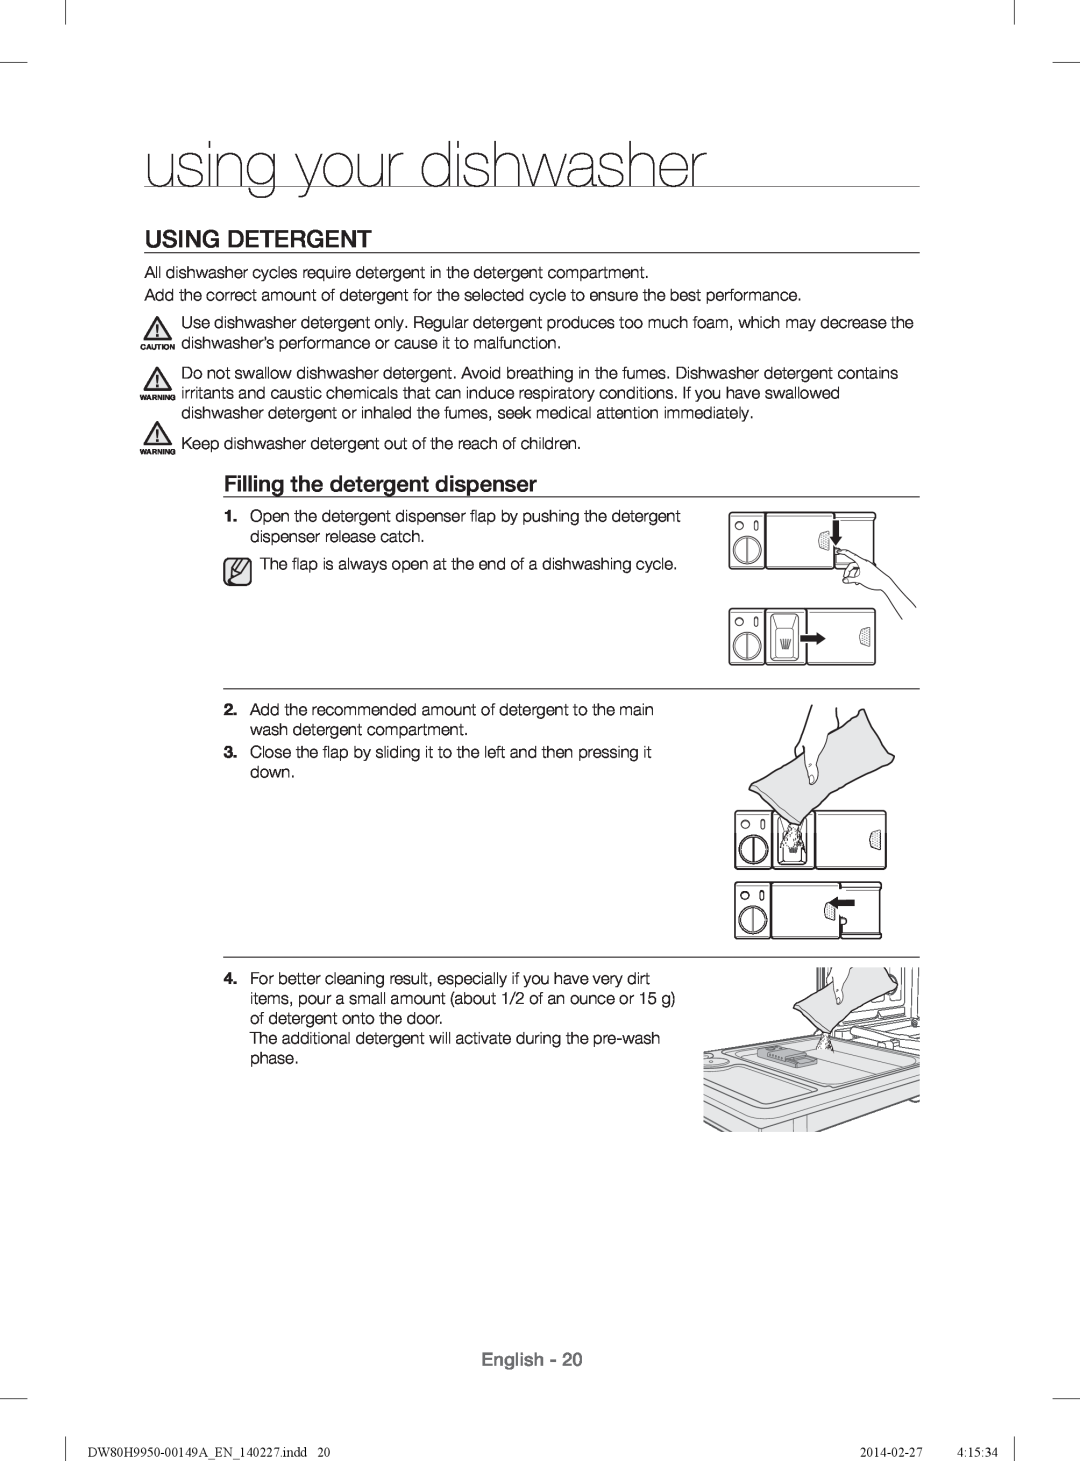 Samsung DW80H9930US user manual Using Detergent, Filling the detergent dispenser, using your dishwasher, English 